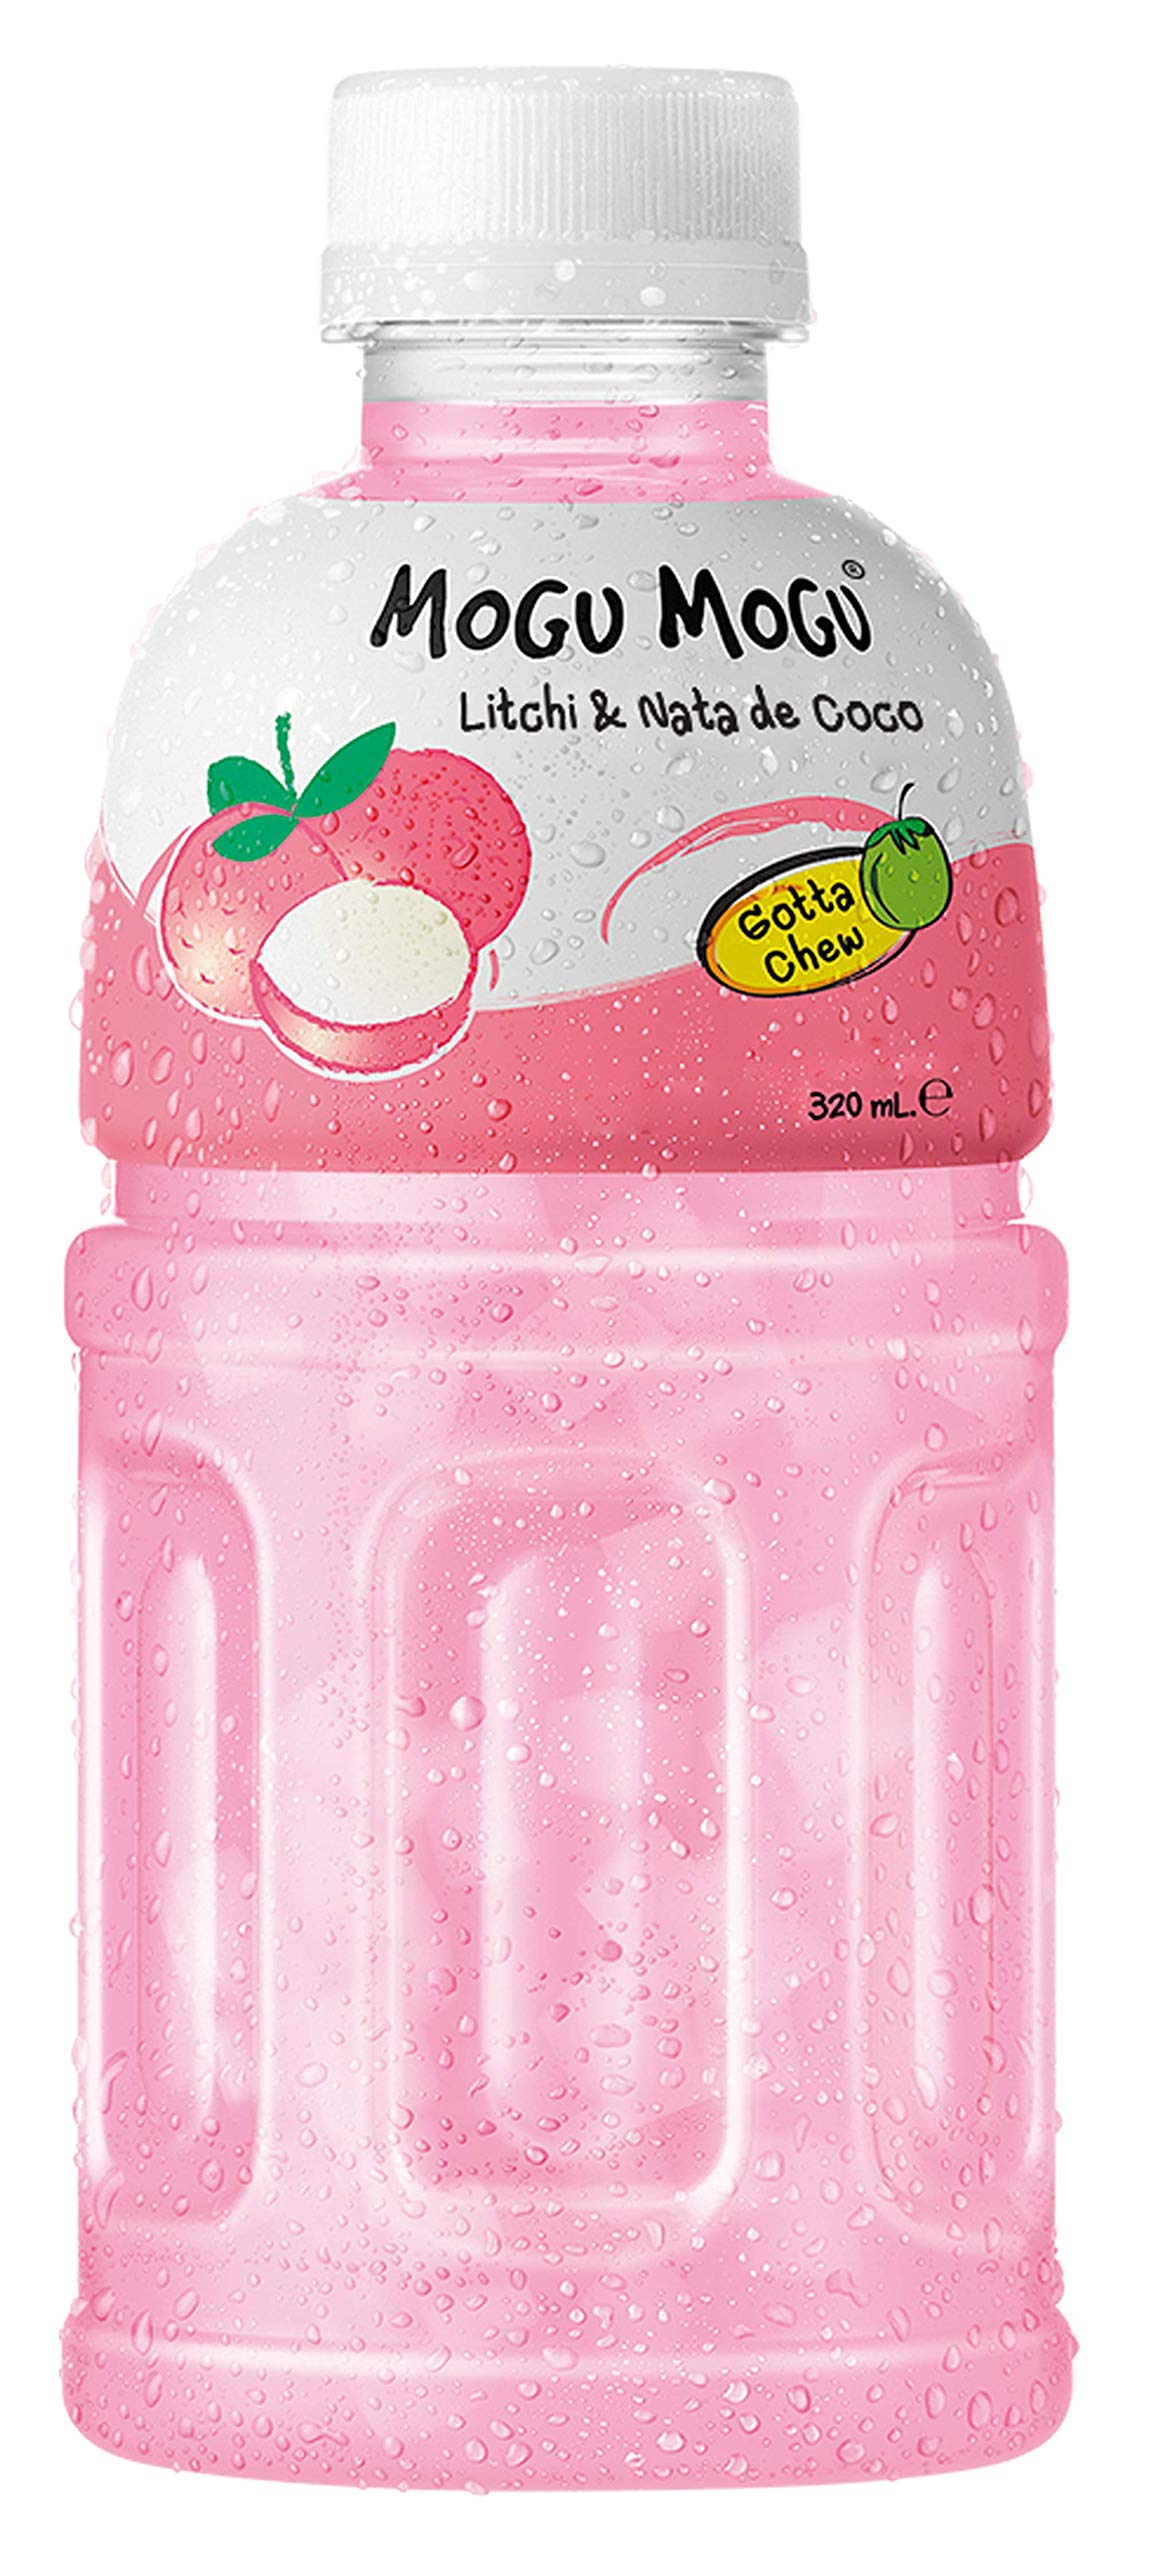 MOGU MOGU  flavored drink with nata de coco 320ML - Girlz box